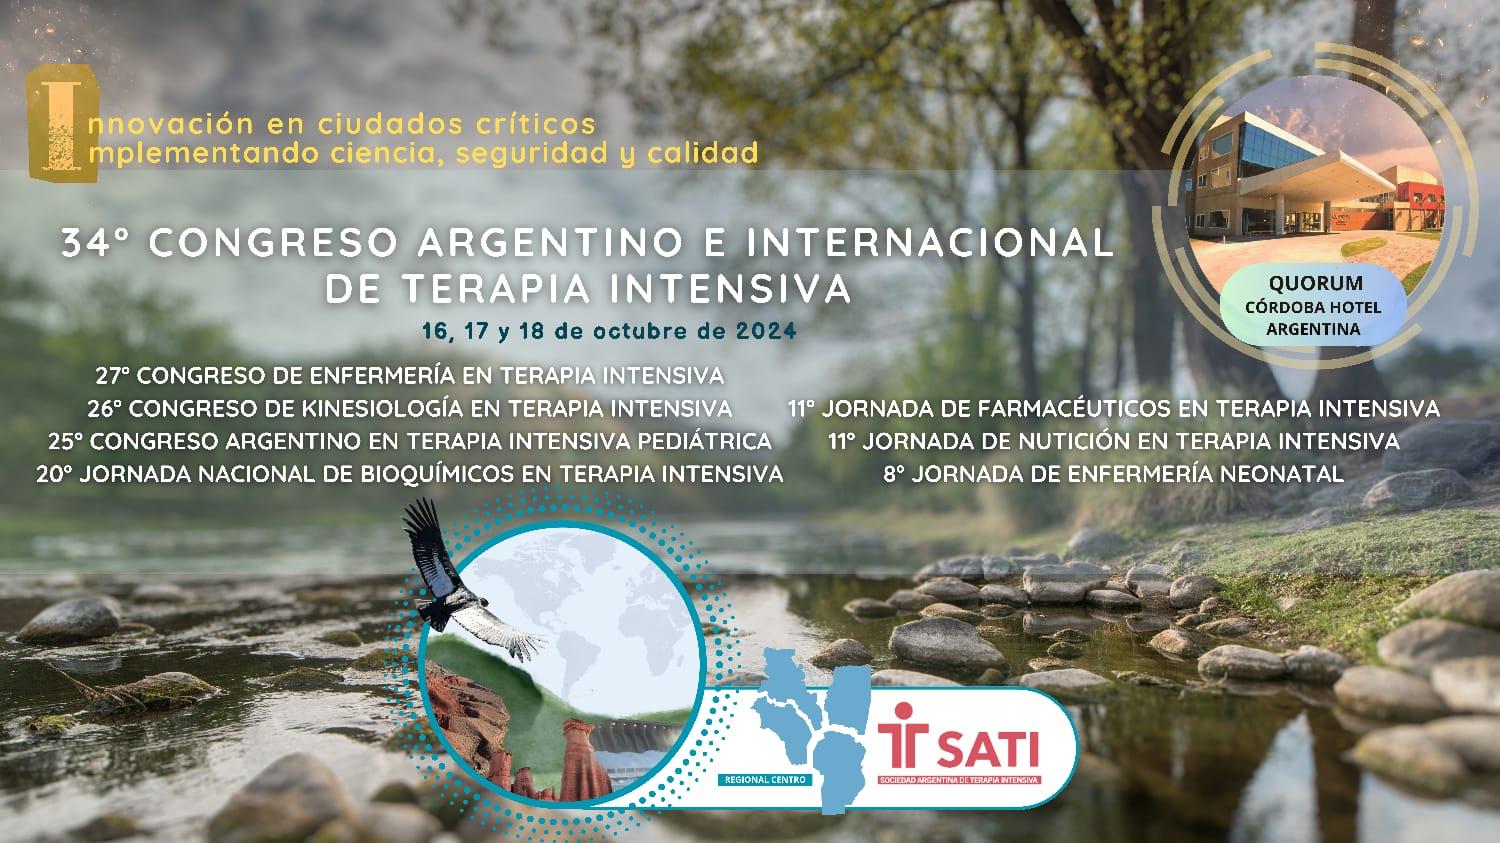 34º Congreso Argentino e Internacional de Terapia Intensiva